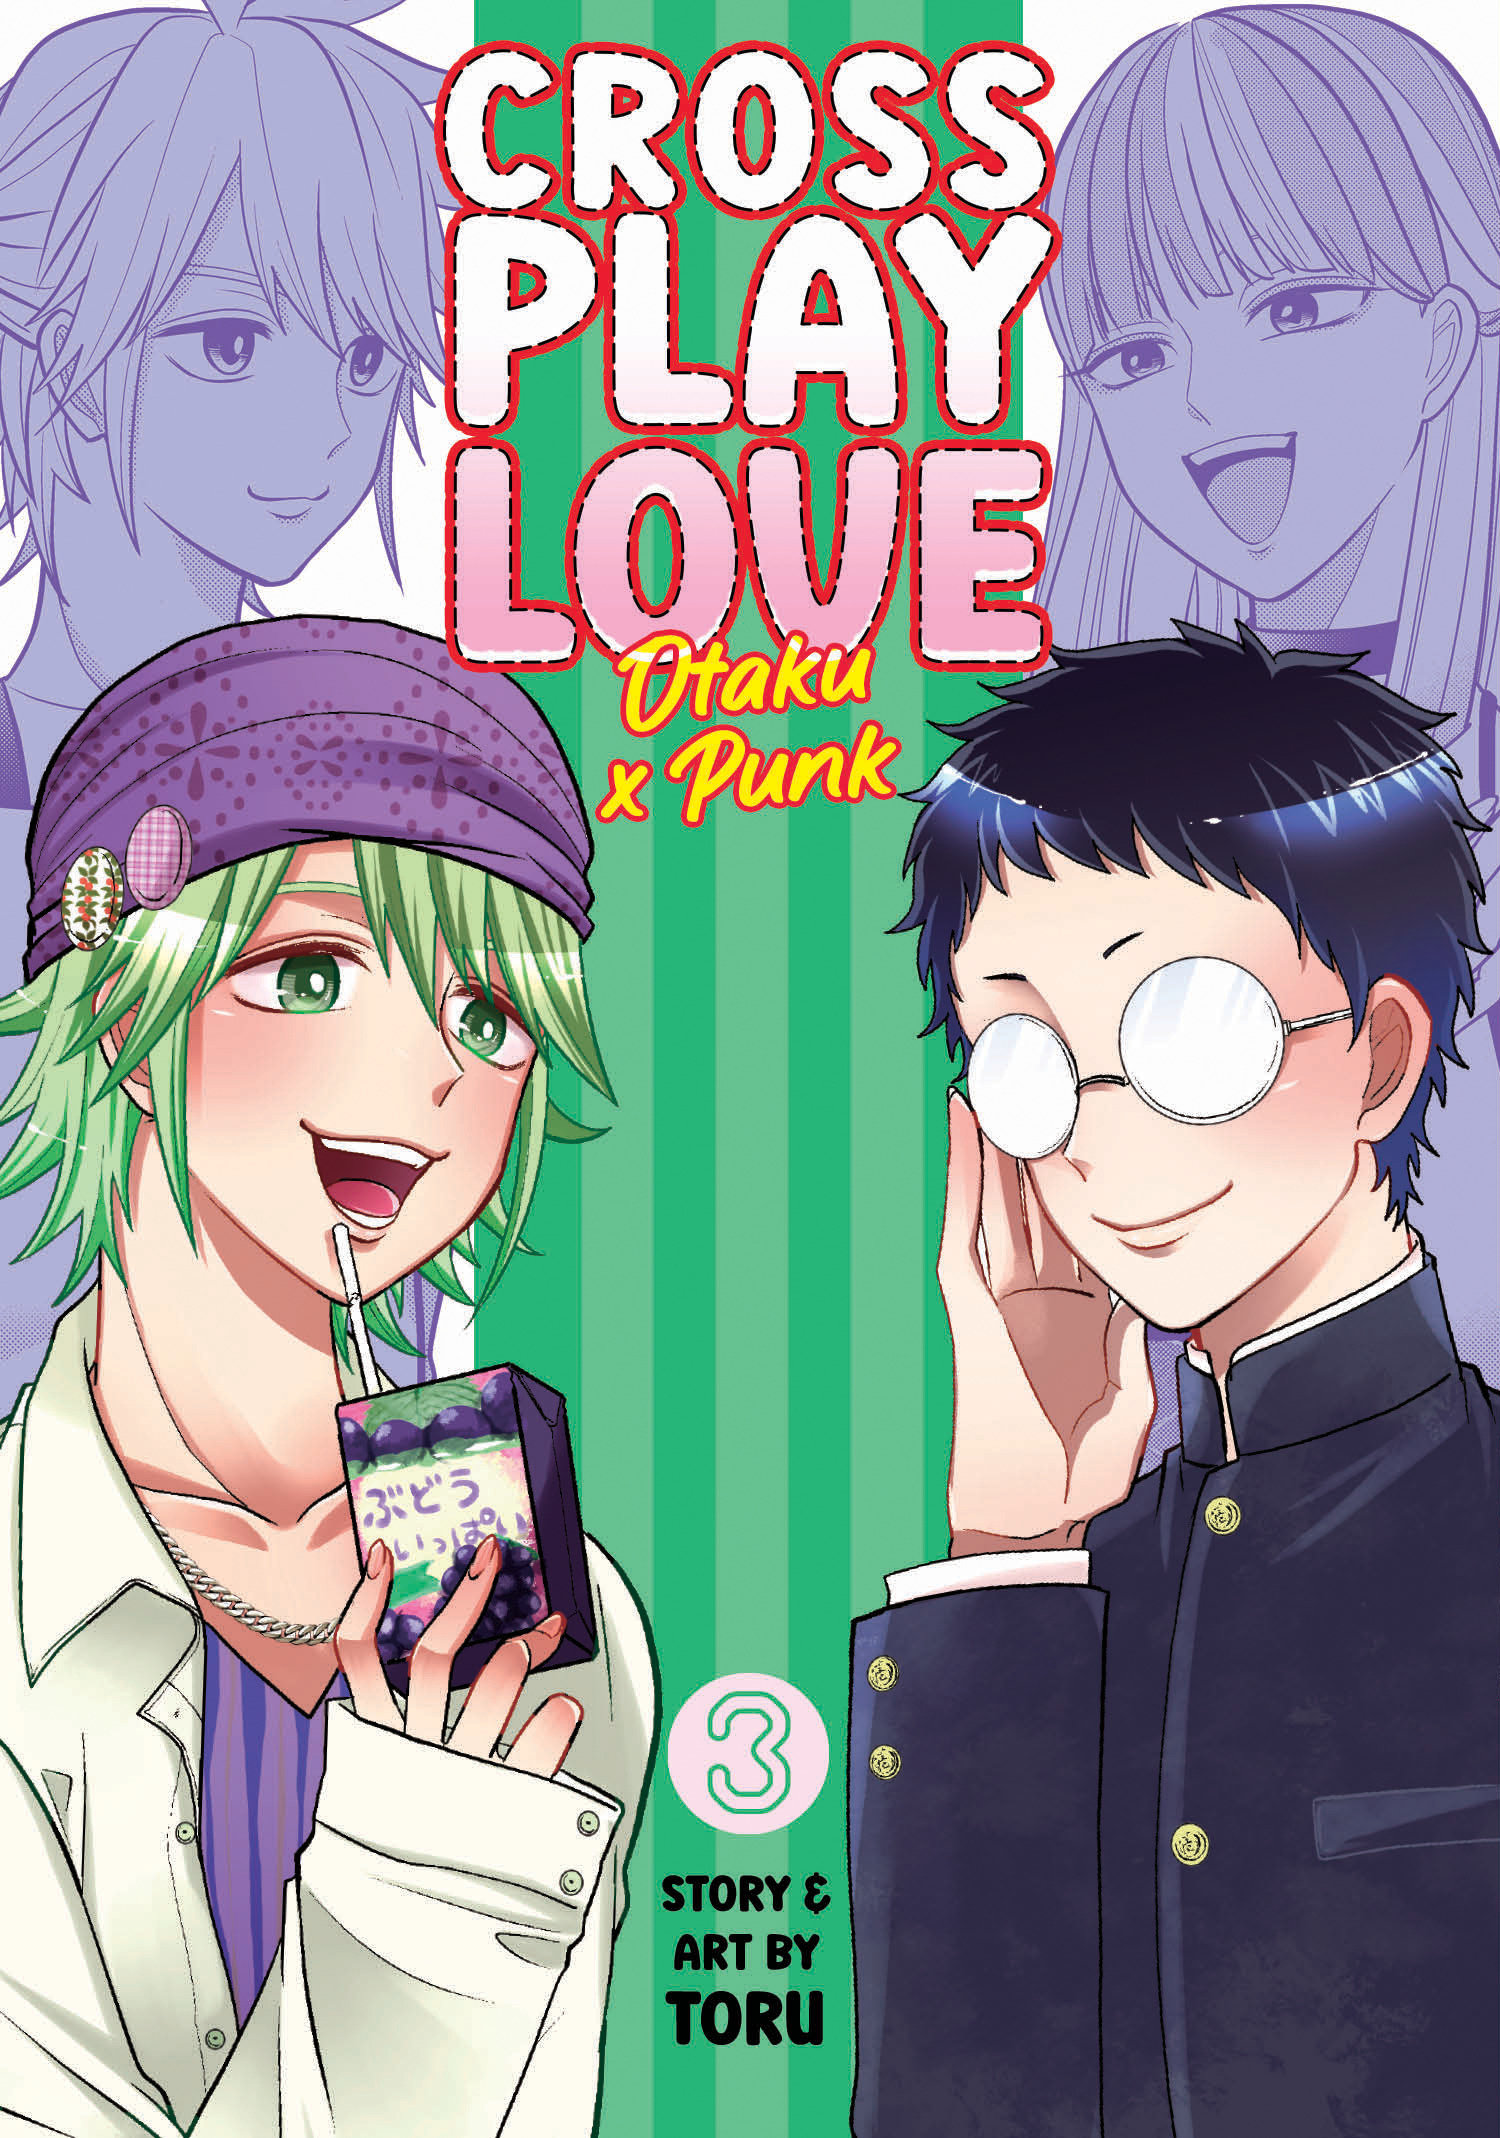 Crossplay Love: Otaku X Punk Manga Volume 3